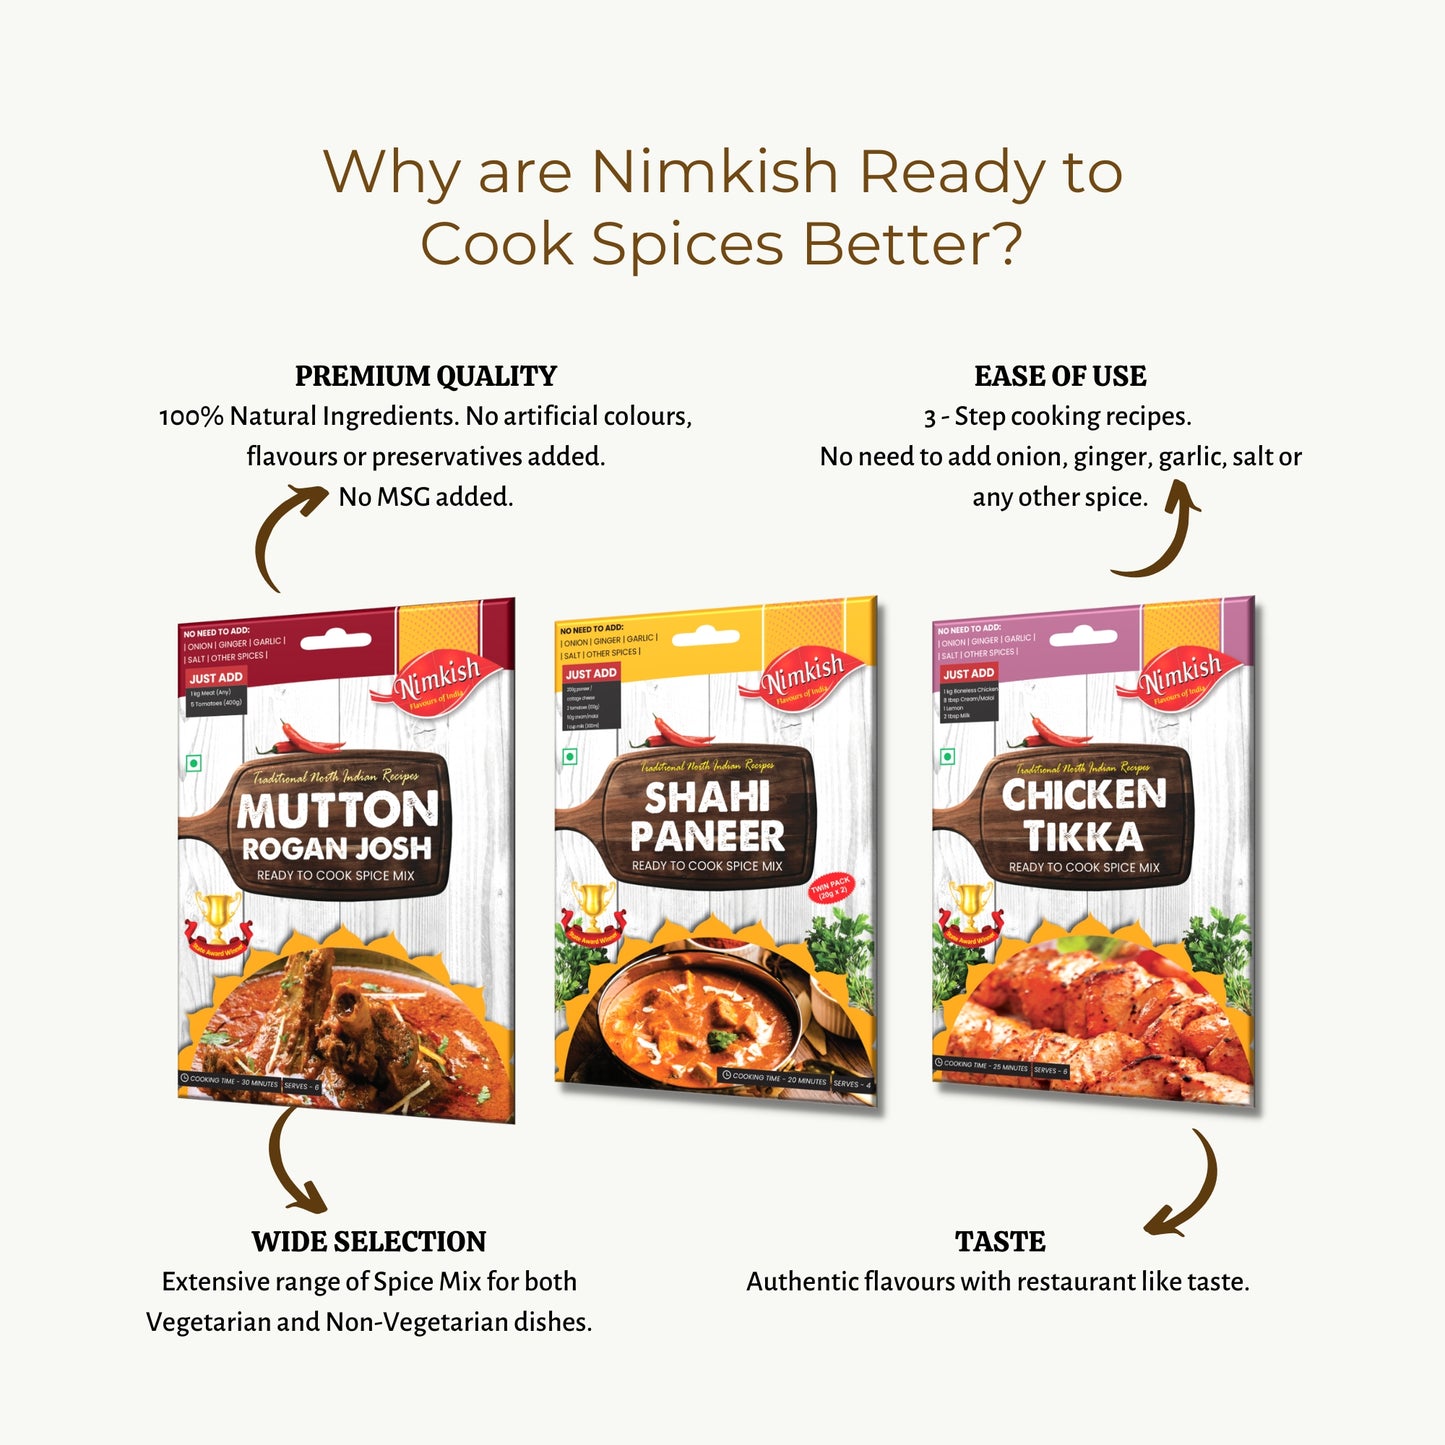 Nimkish Chicken Curry Spice Mix (Extra Curry Range) 40g